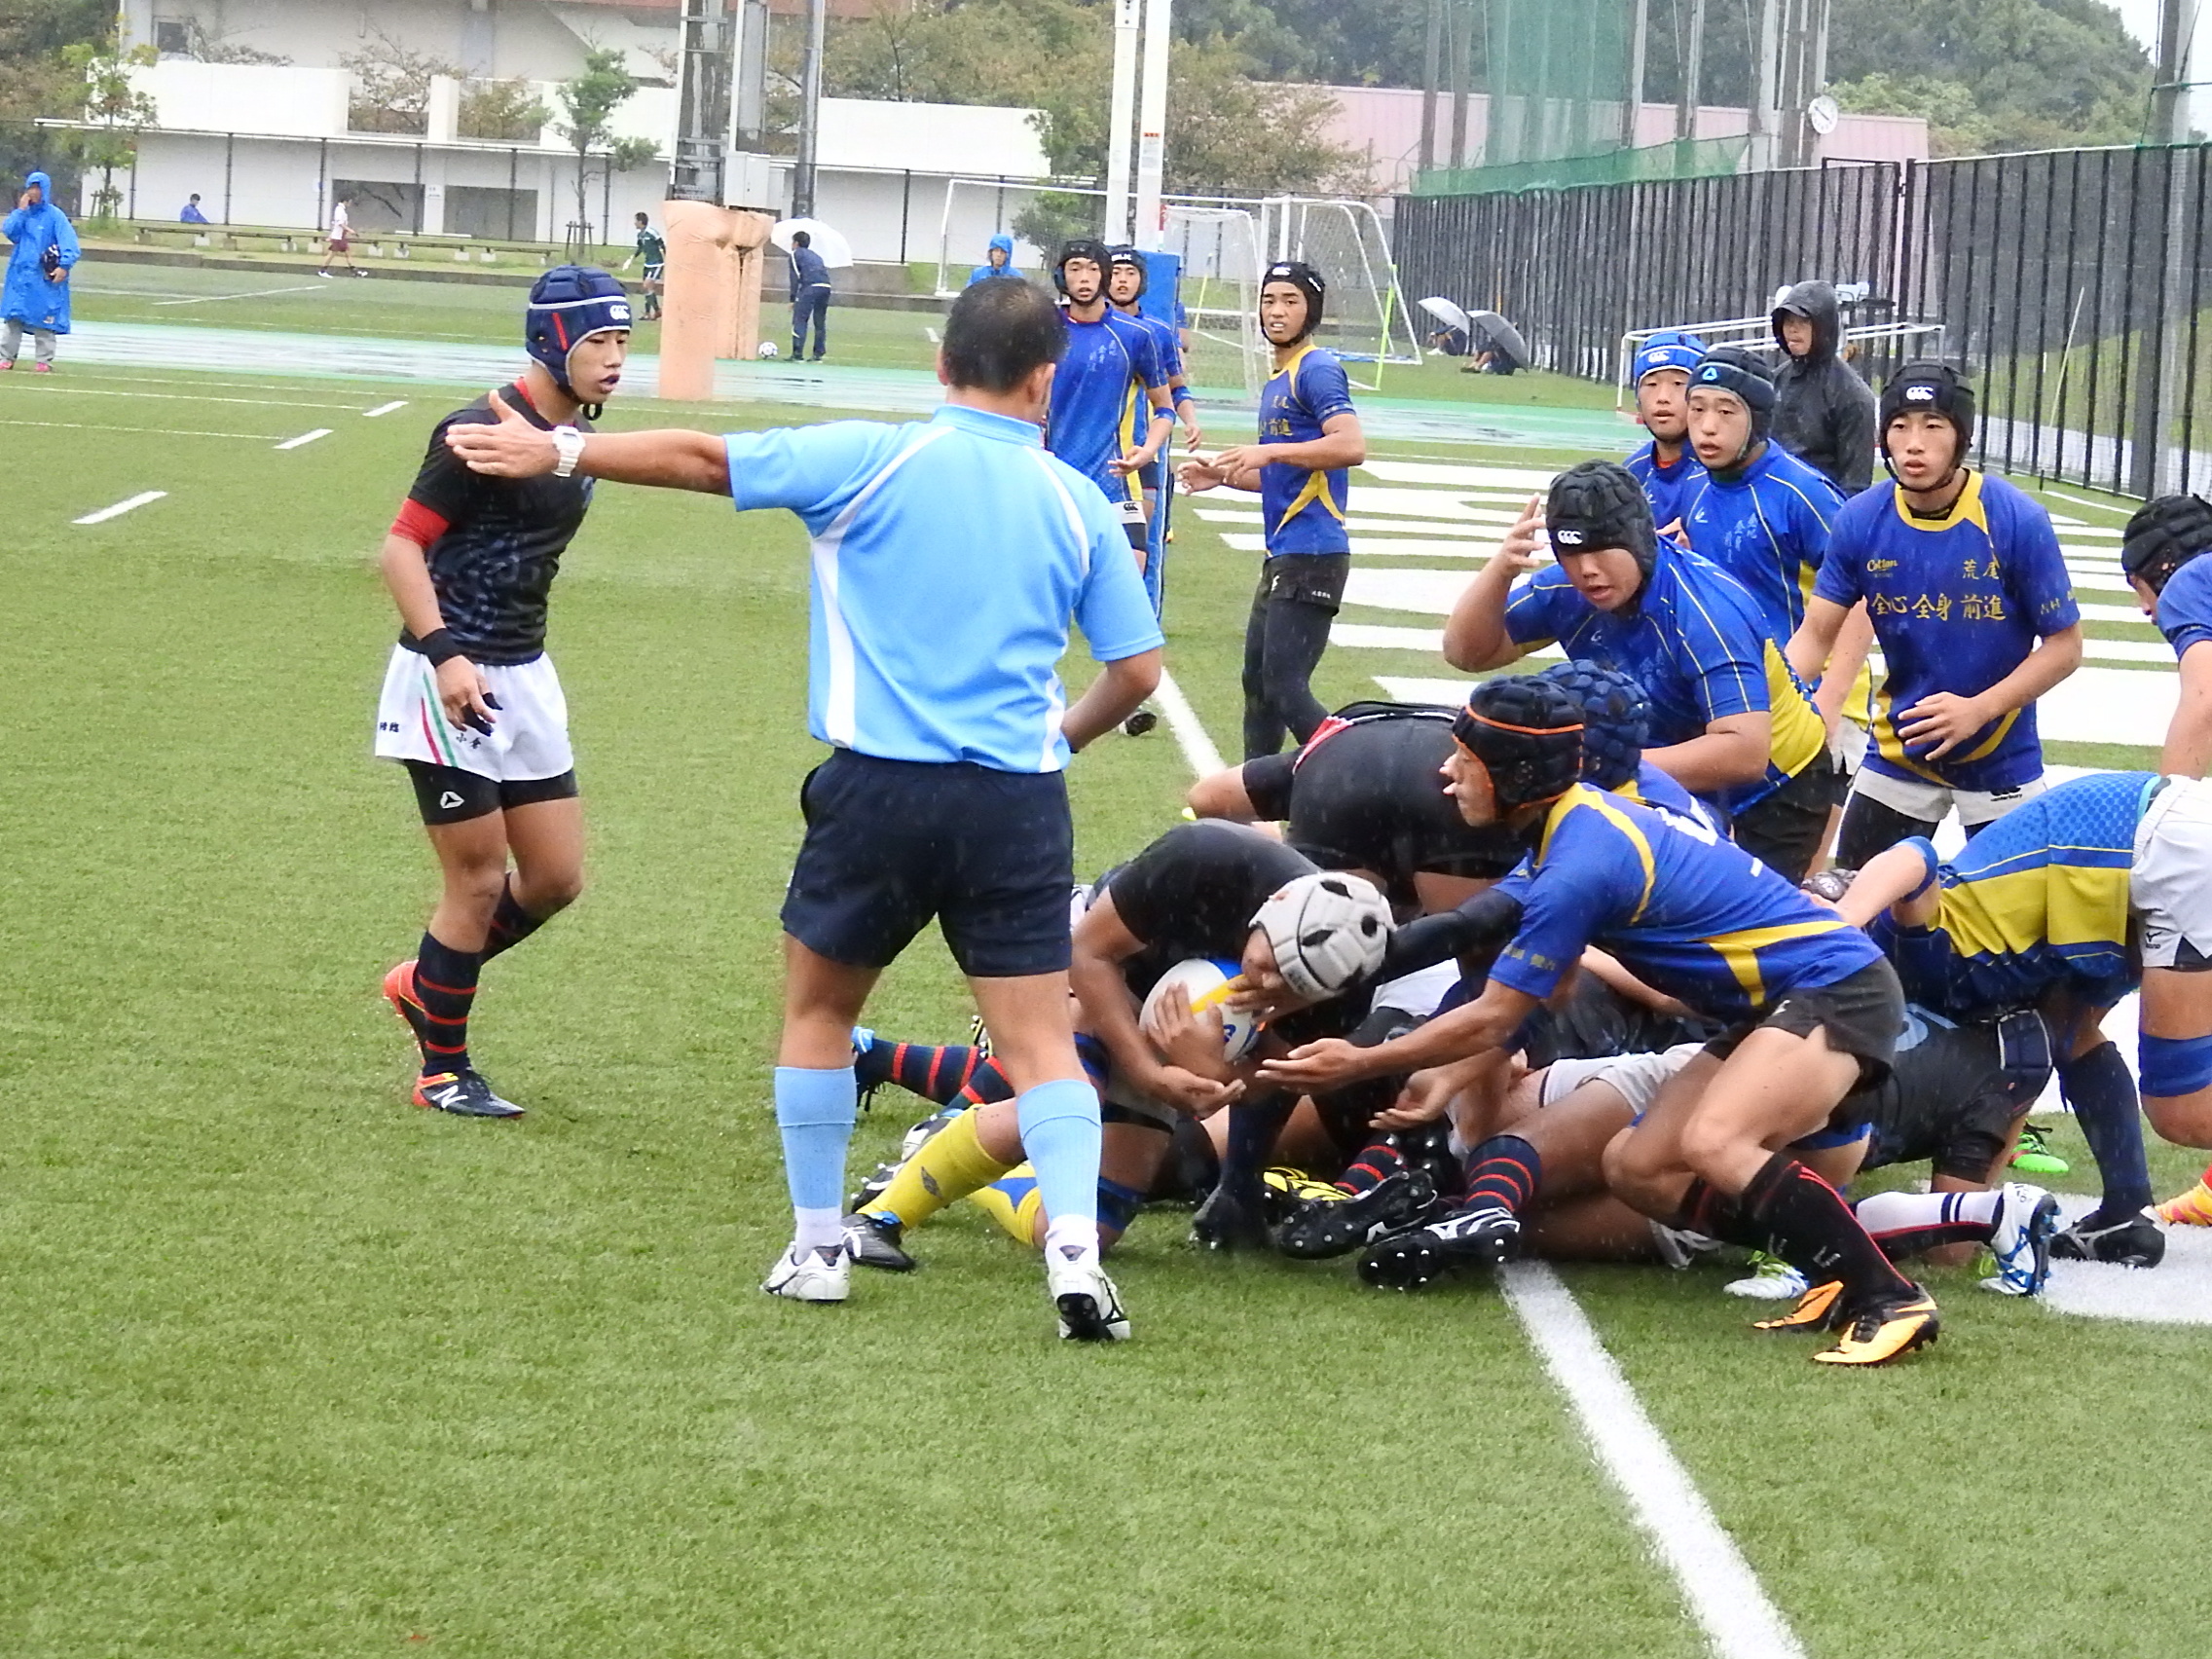 http://kokura-rugby.sakura.ne.jp/DSCN9225.JPG